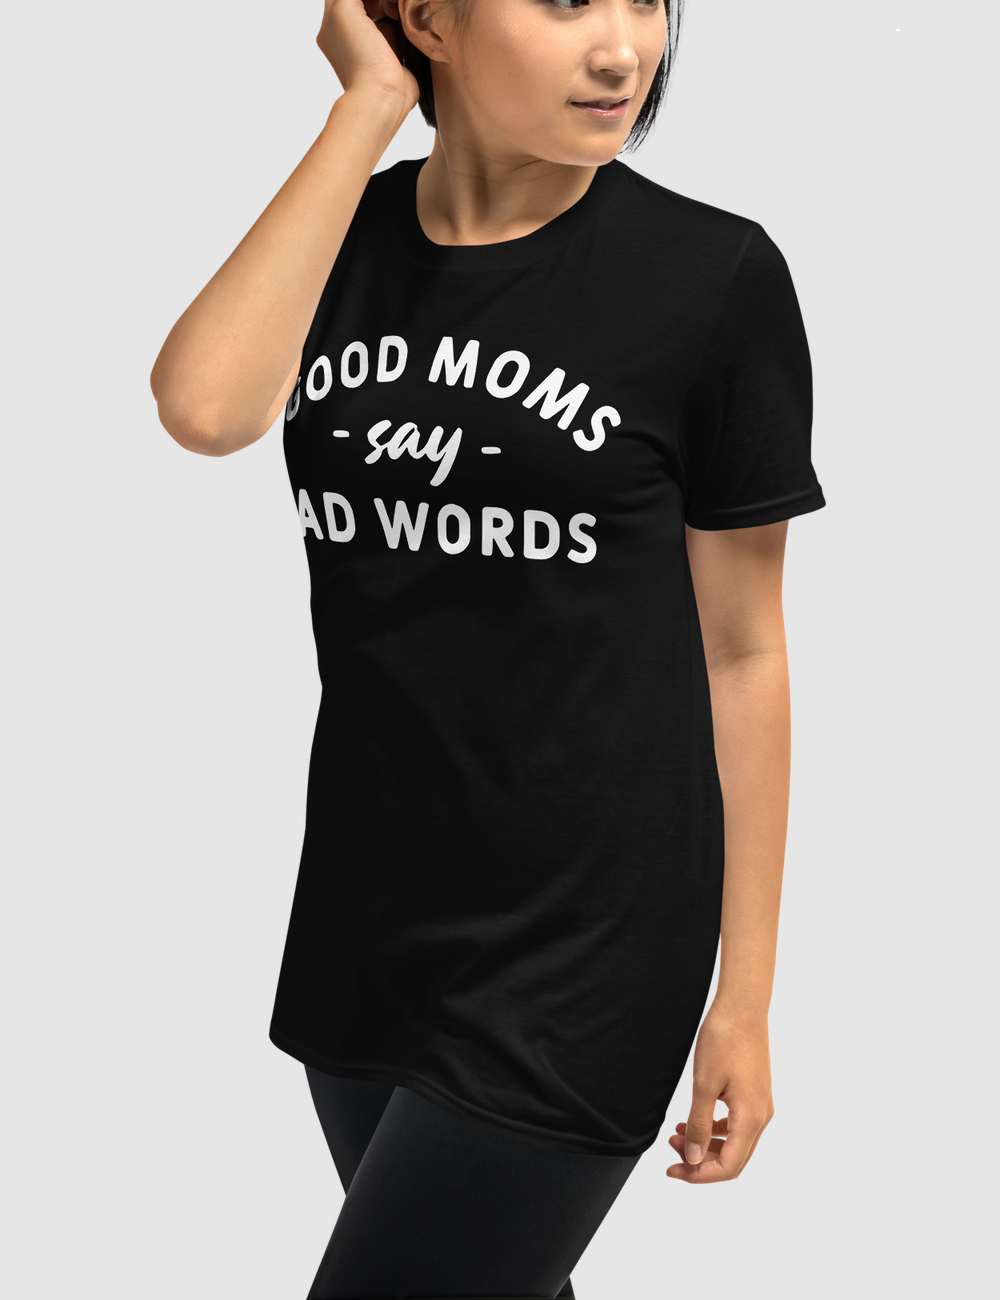 Good Moms Say Bad Words Women's Relaxed T-Shirt OniTakai